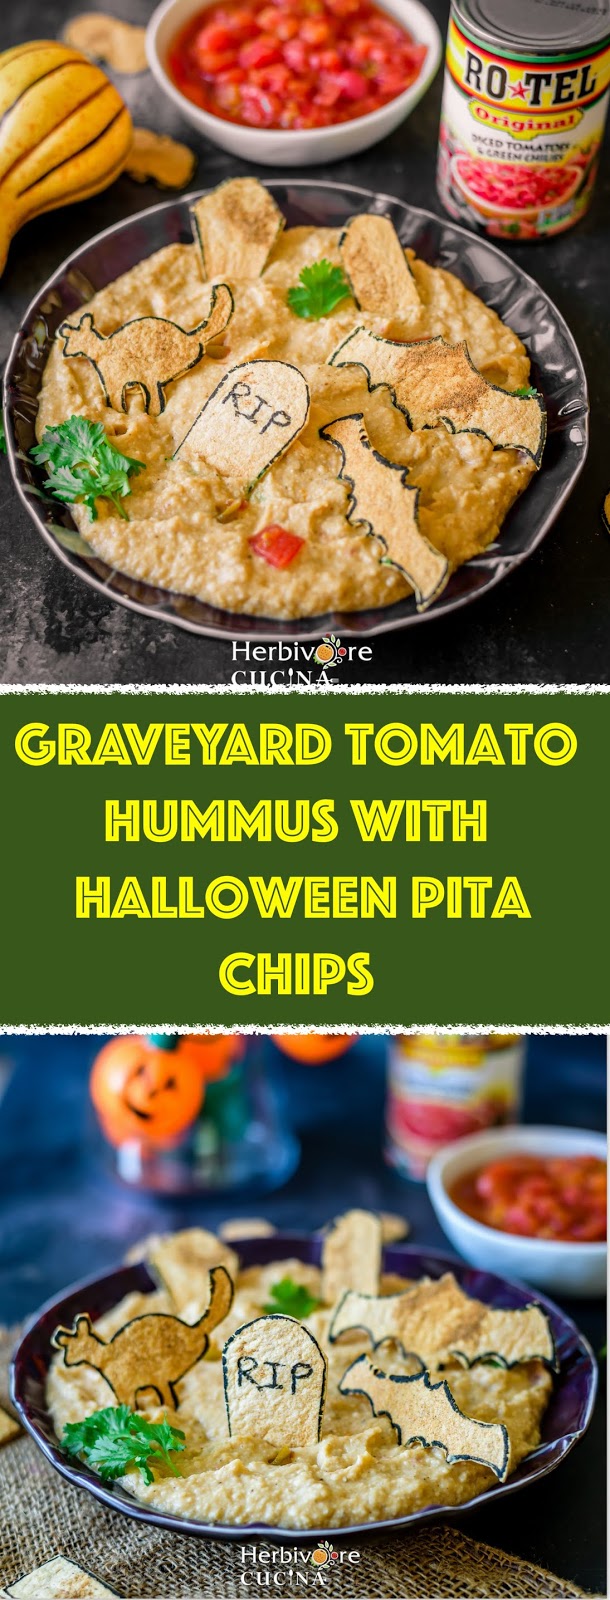 Herbivore Cucina: Graveyard Tomato Hummus with Halloween Pita Chips